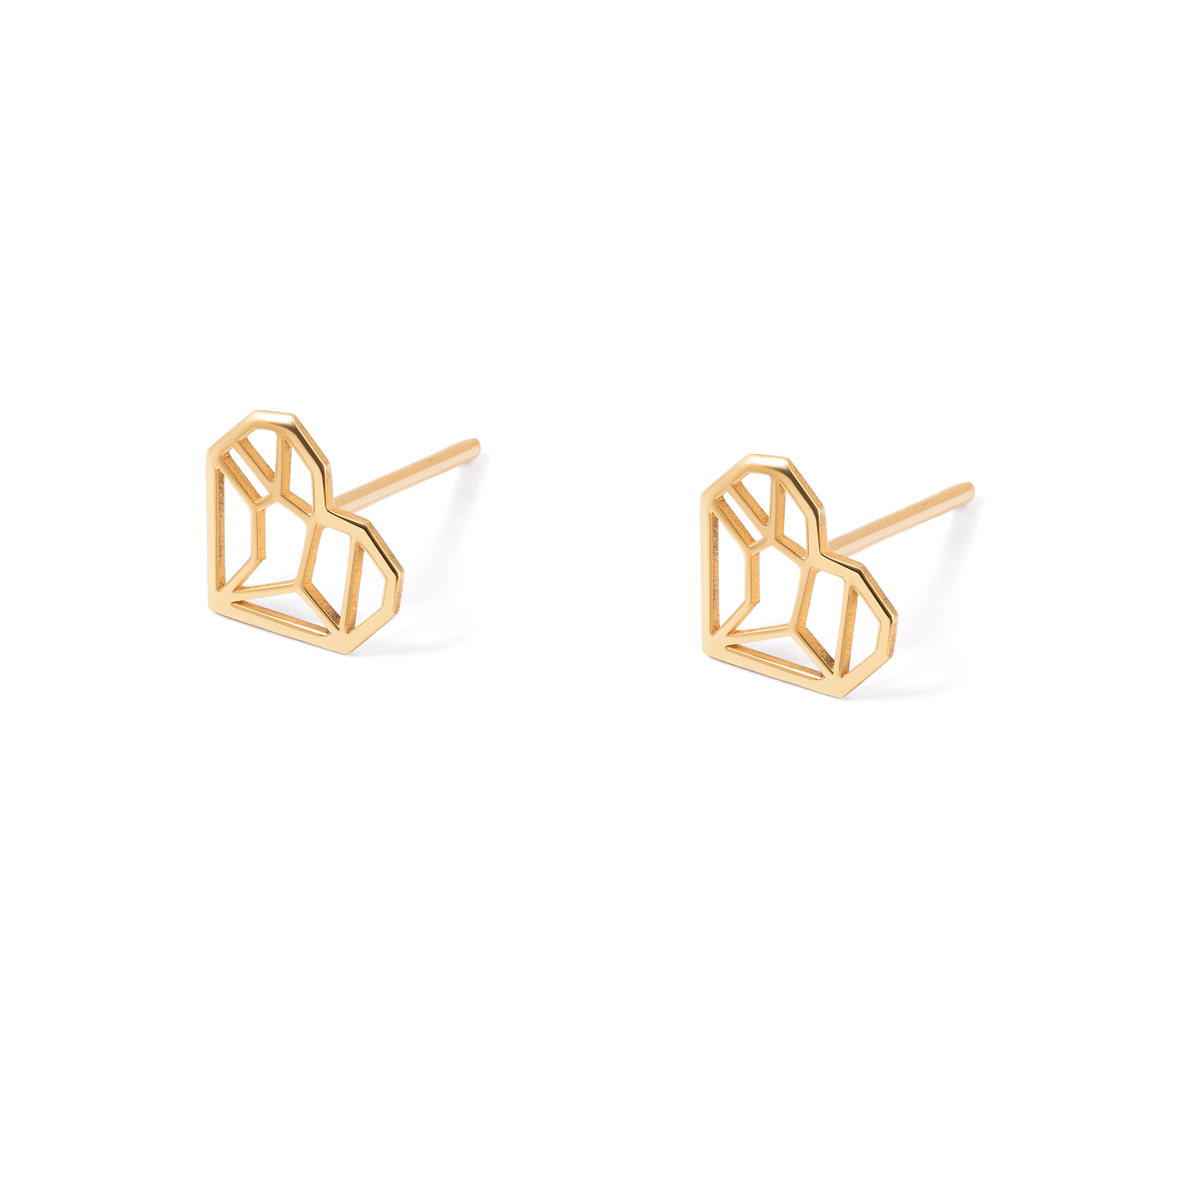 Origami heart gold earrings g